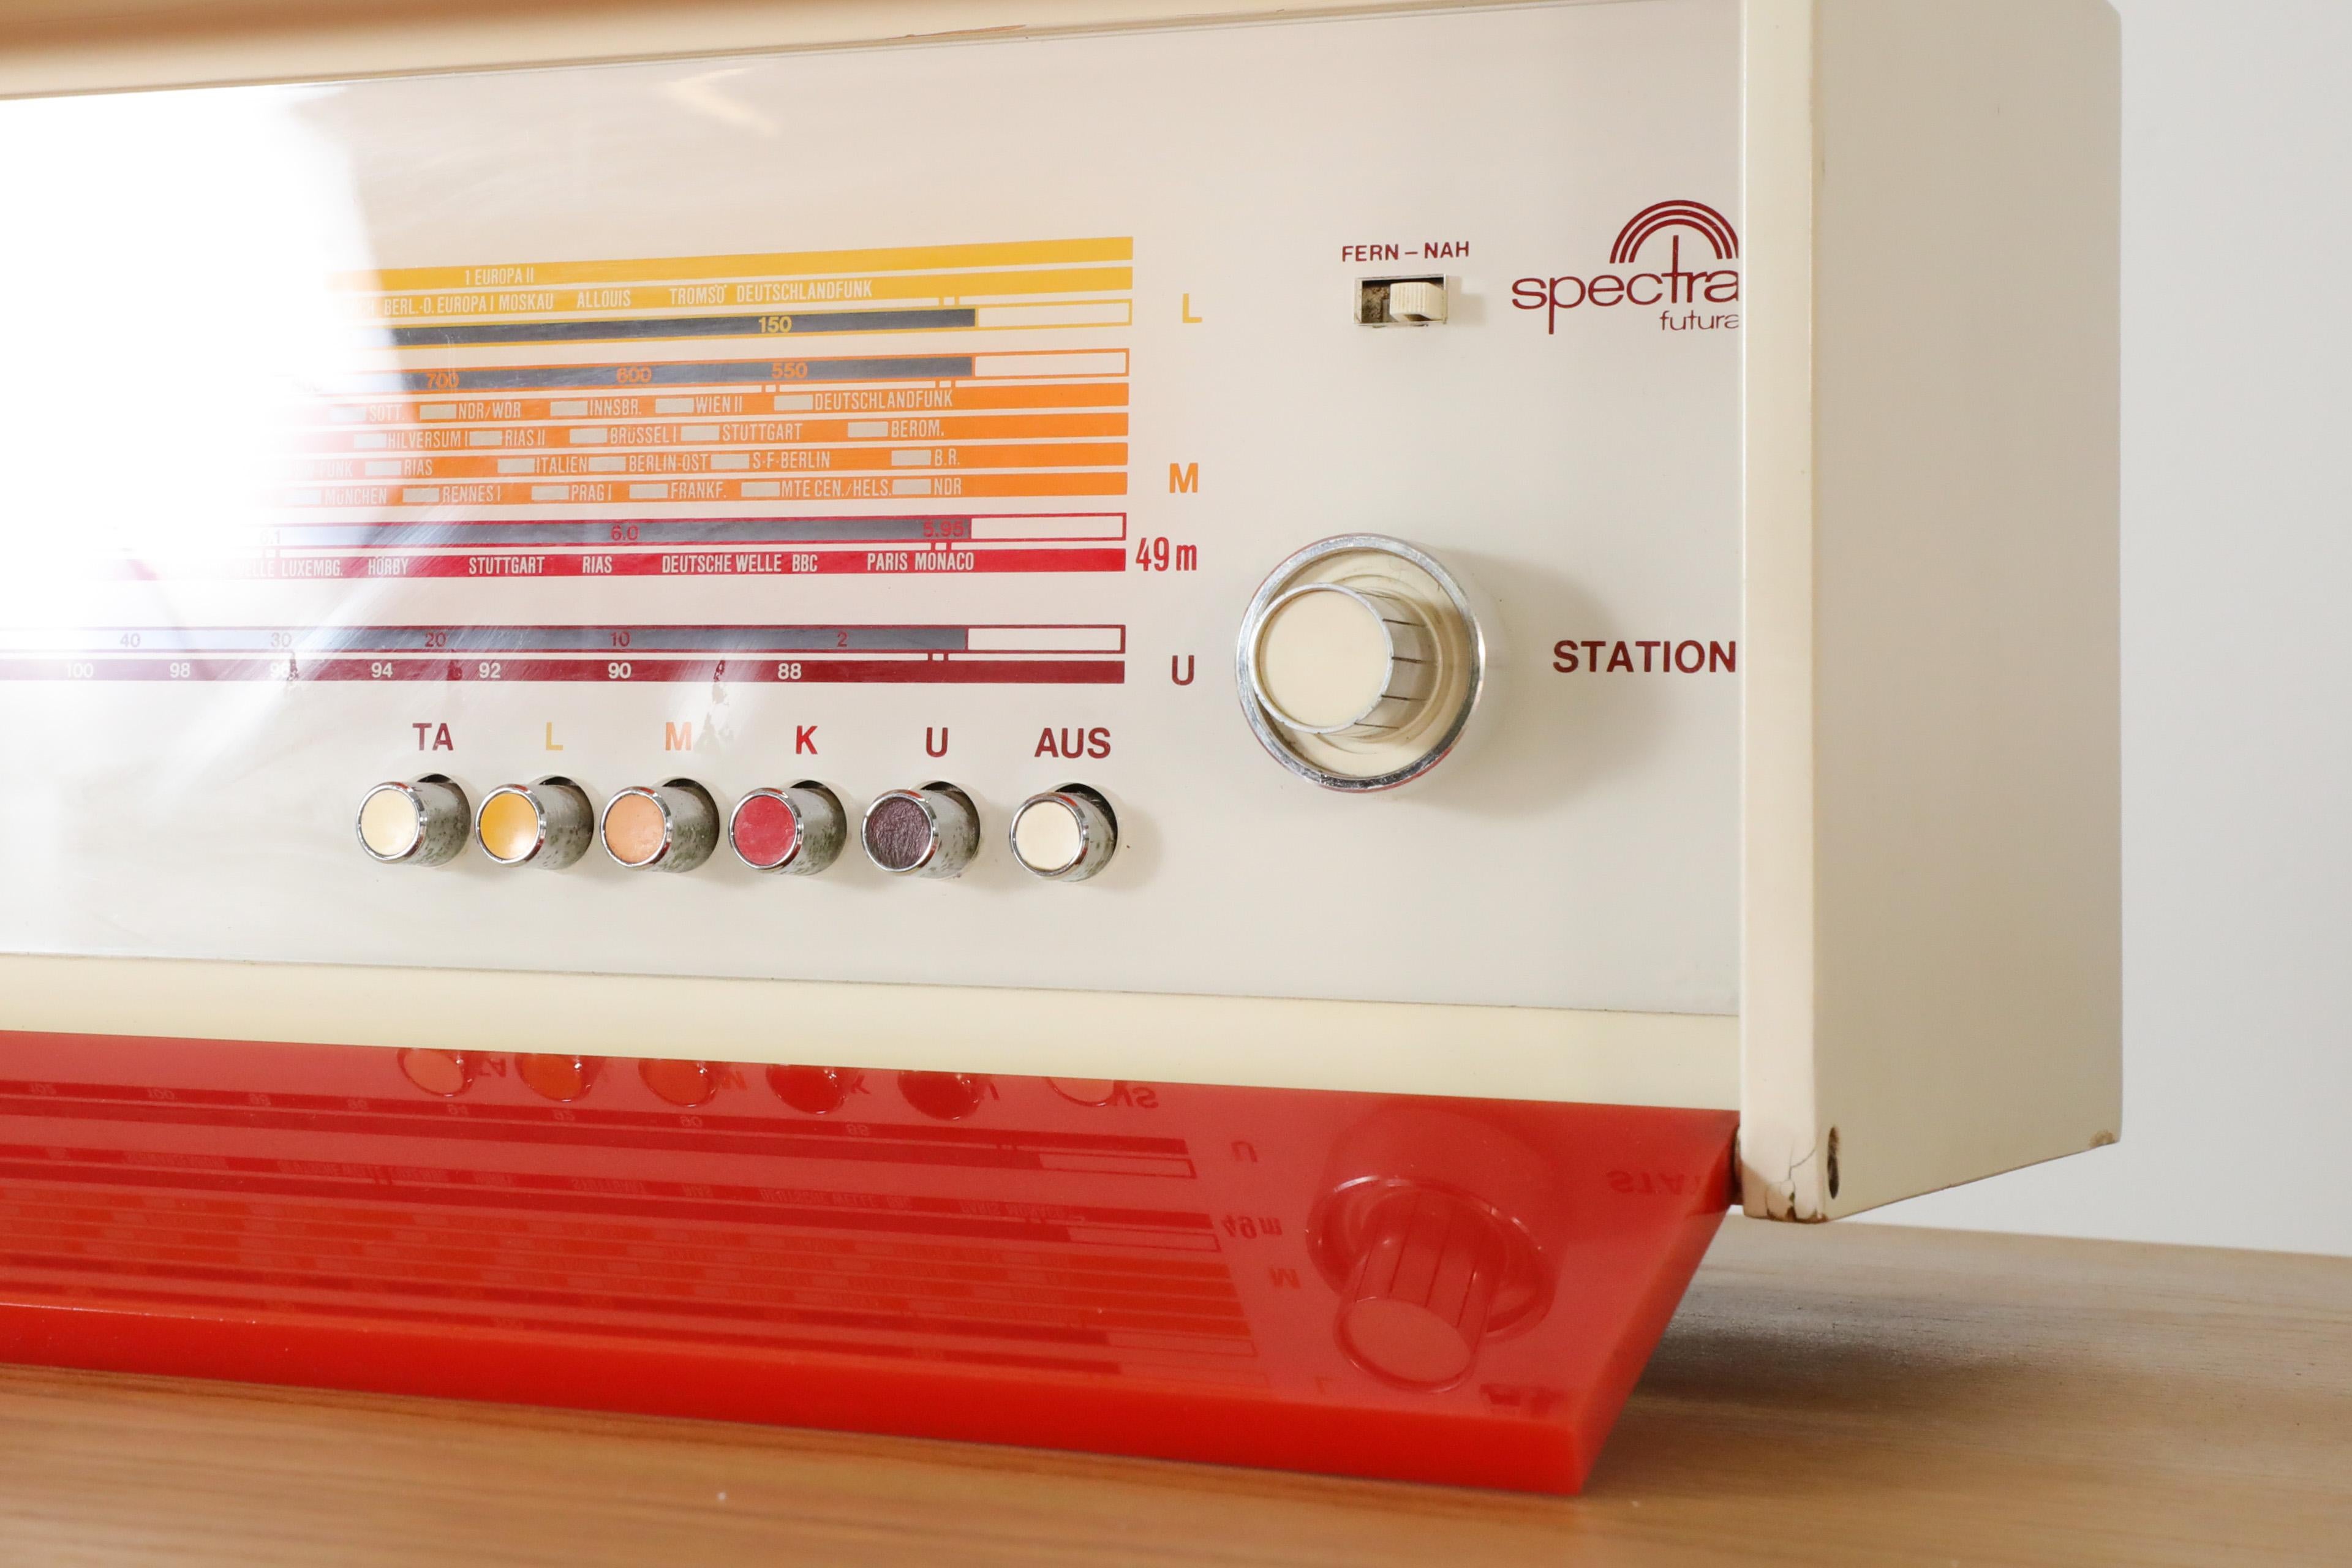 Raymond Loewy entworfenes Nordmende Spectra Futura Transistor Radio in Rot & Orange im Angebot 3